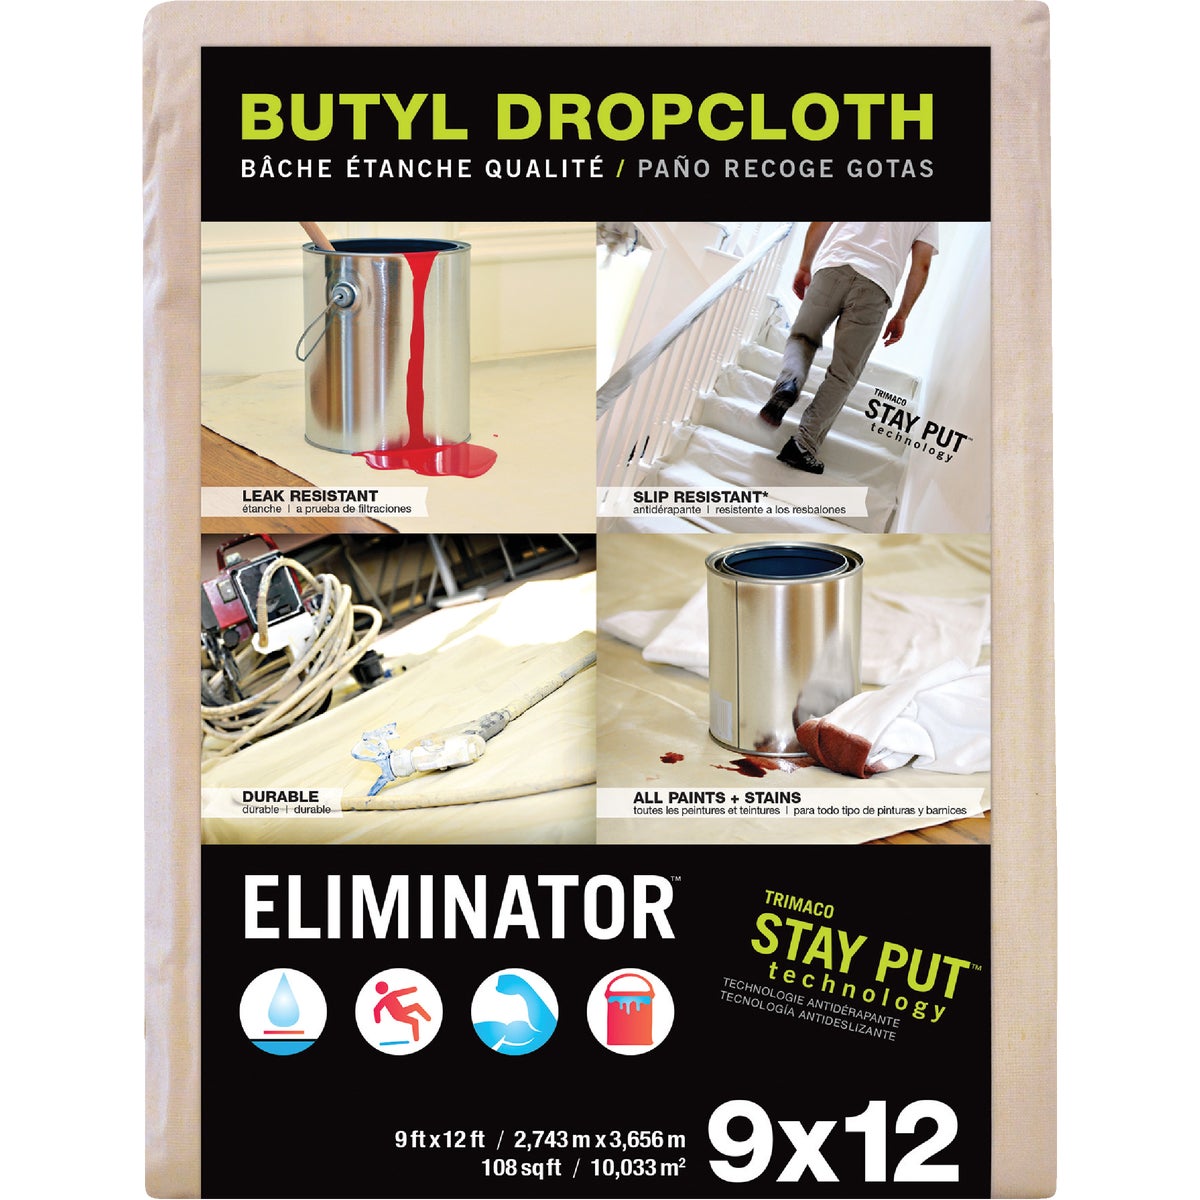 Item 788115, Trimaco's Eliminator Butyl Drop Cloth is the toughest, roughest most 